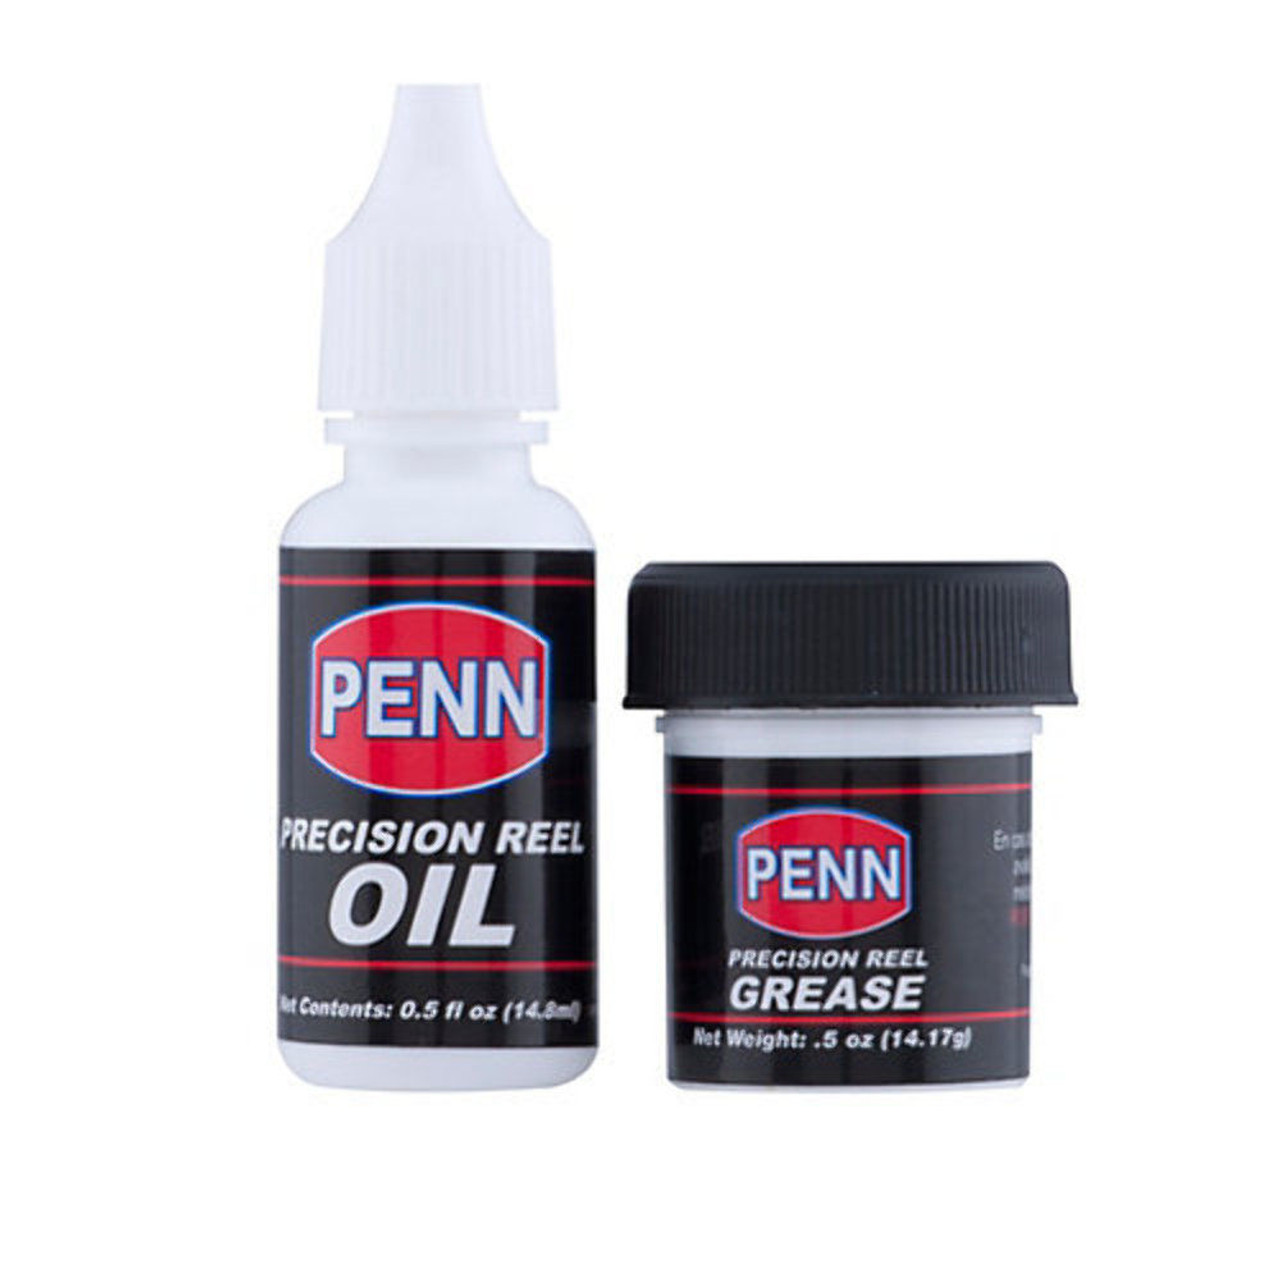 Penn Precision Reel Oil & Grease Pack